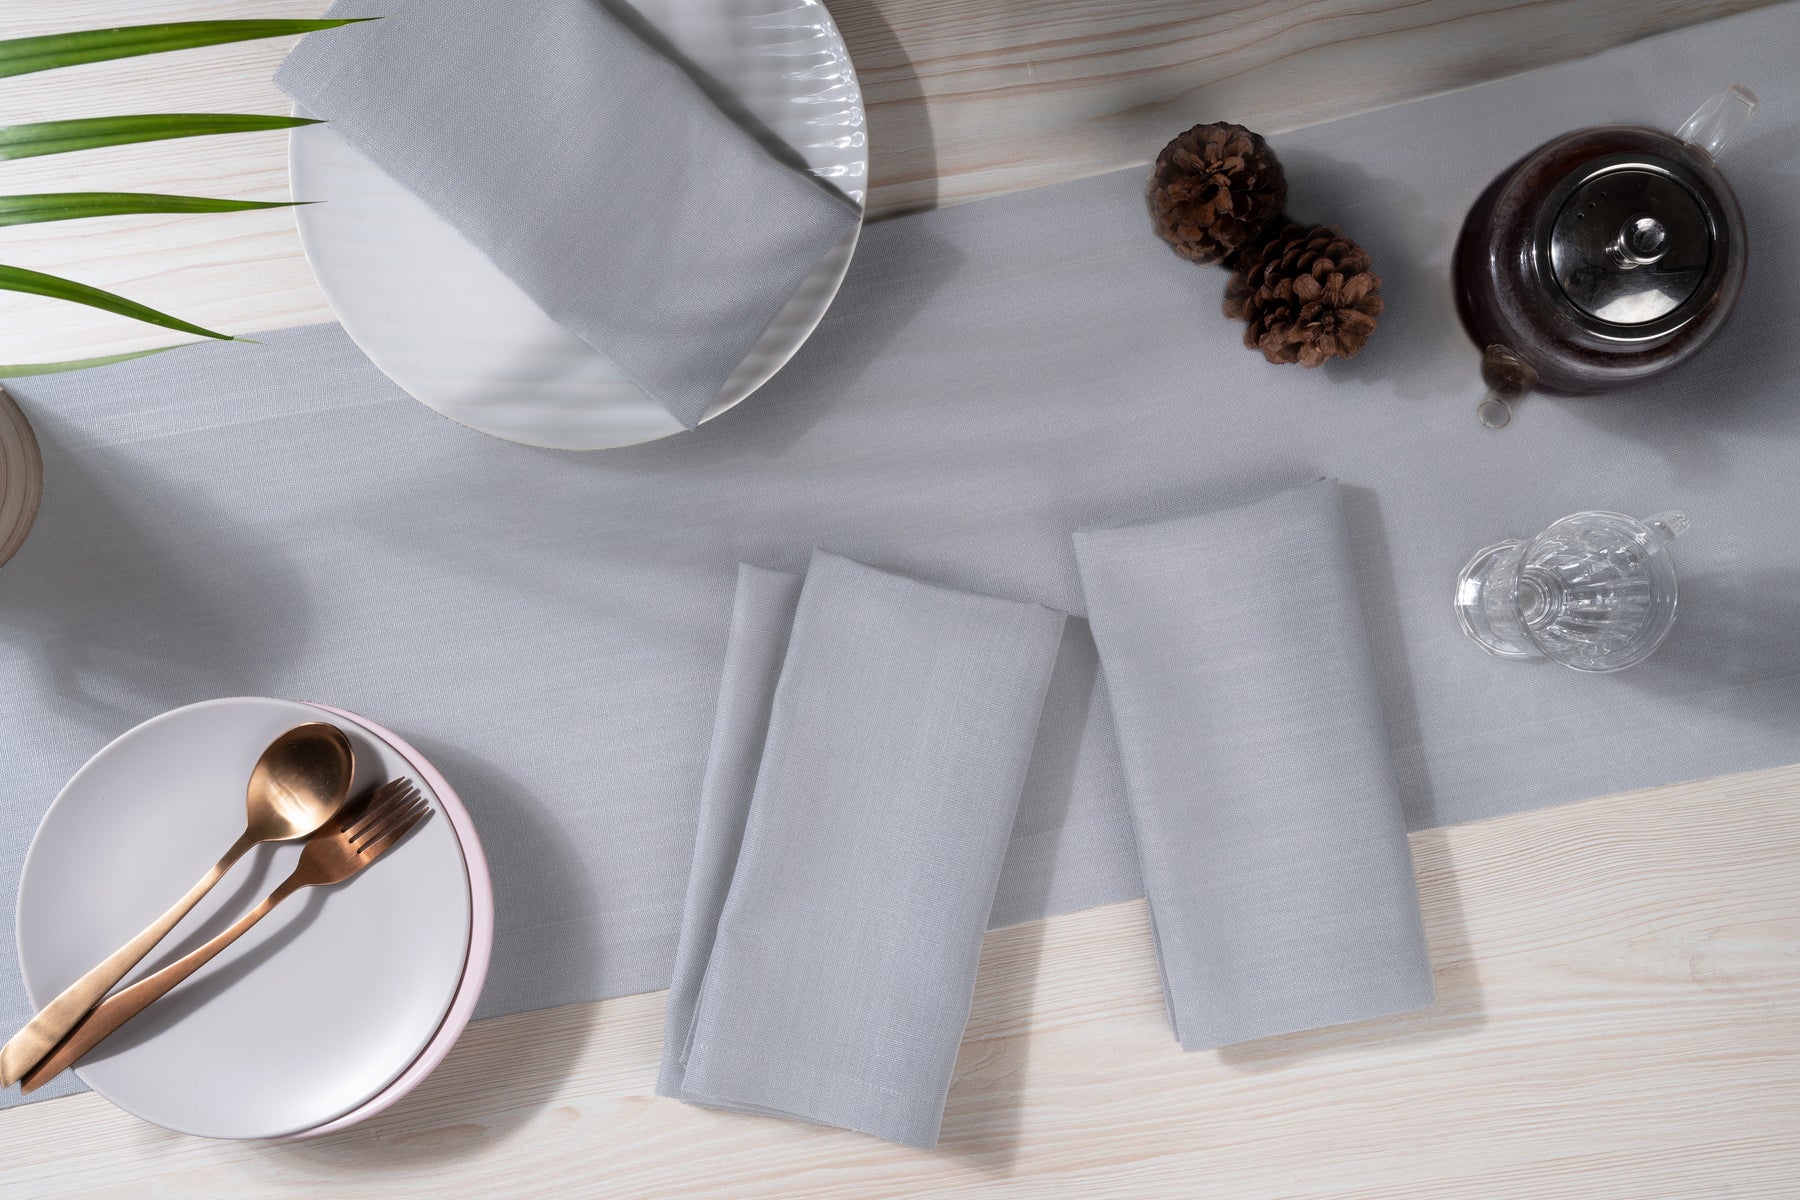 Light Grey Linen Look Recycled Fabric Mitered Corner Dinner Napkins